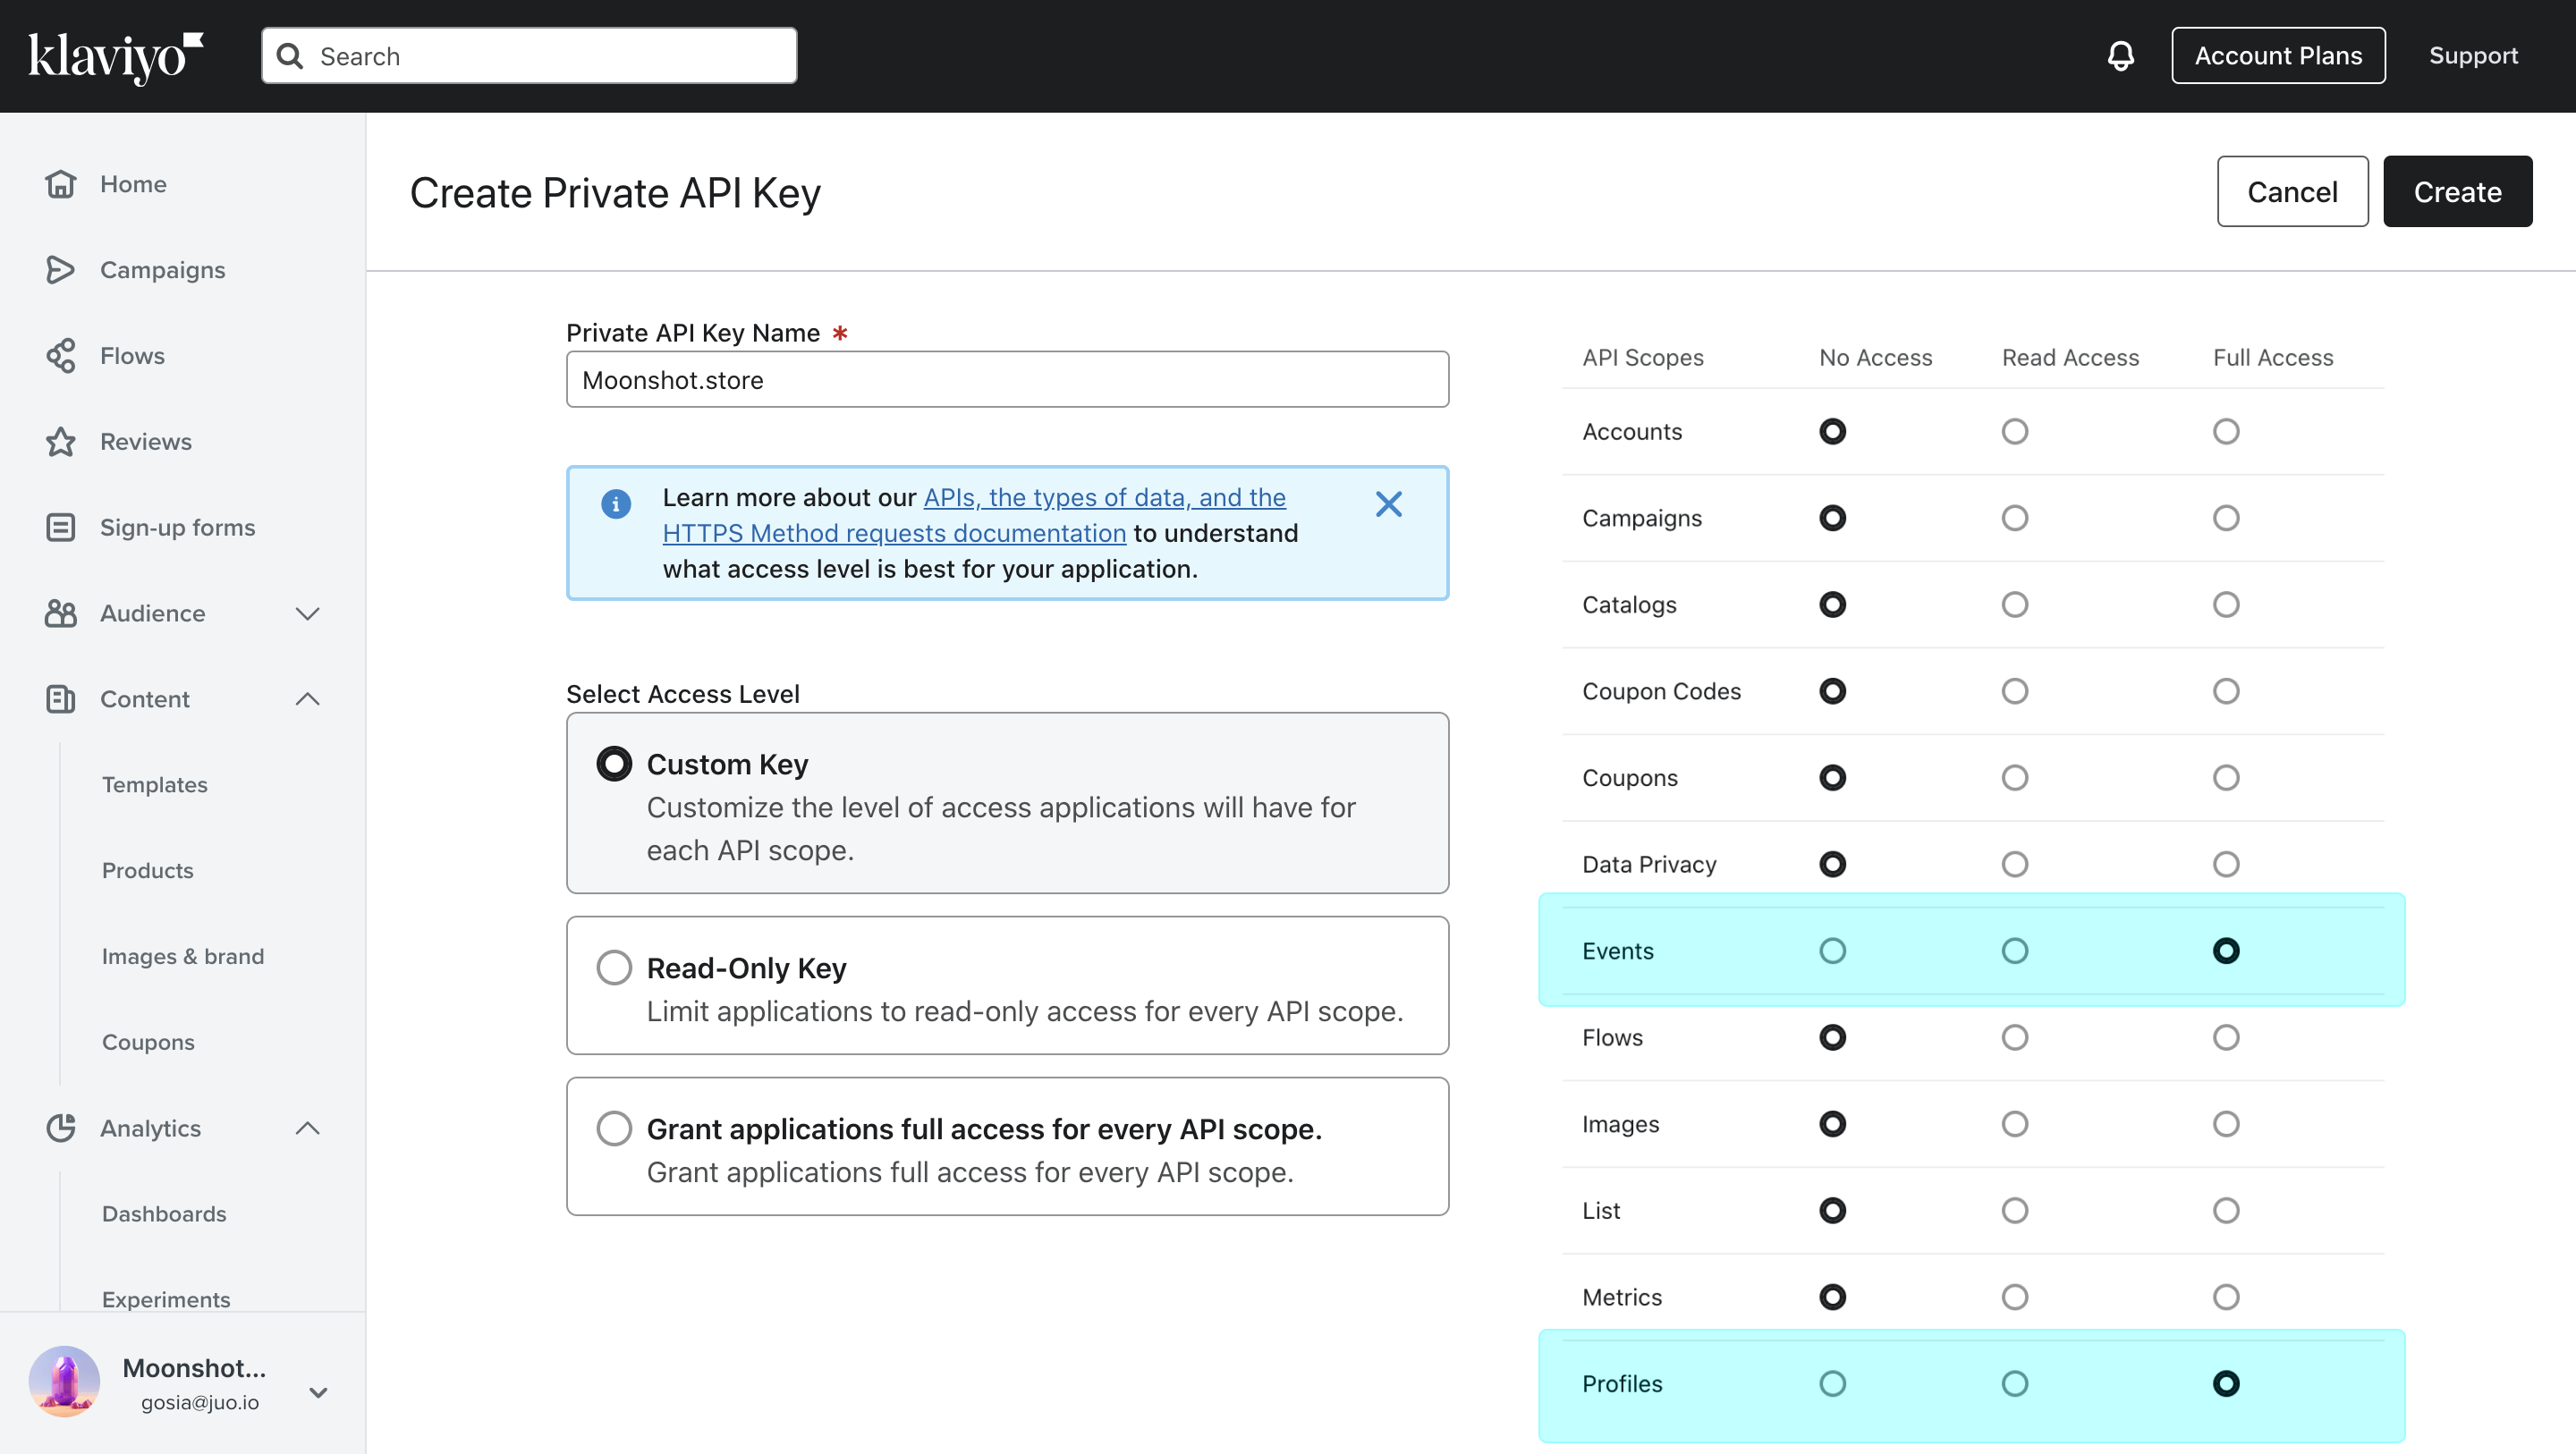 Klaviyo settings - Create new Private API Key